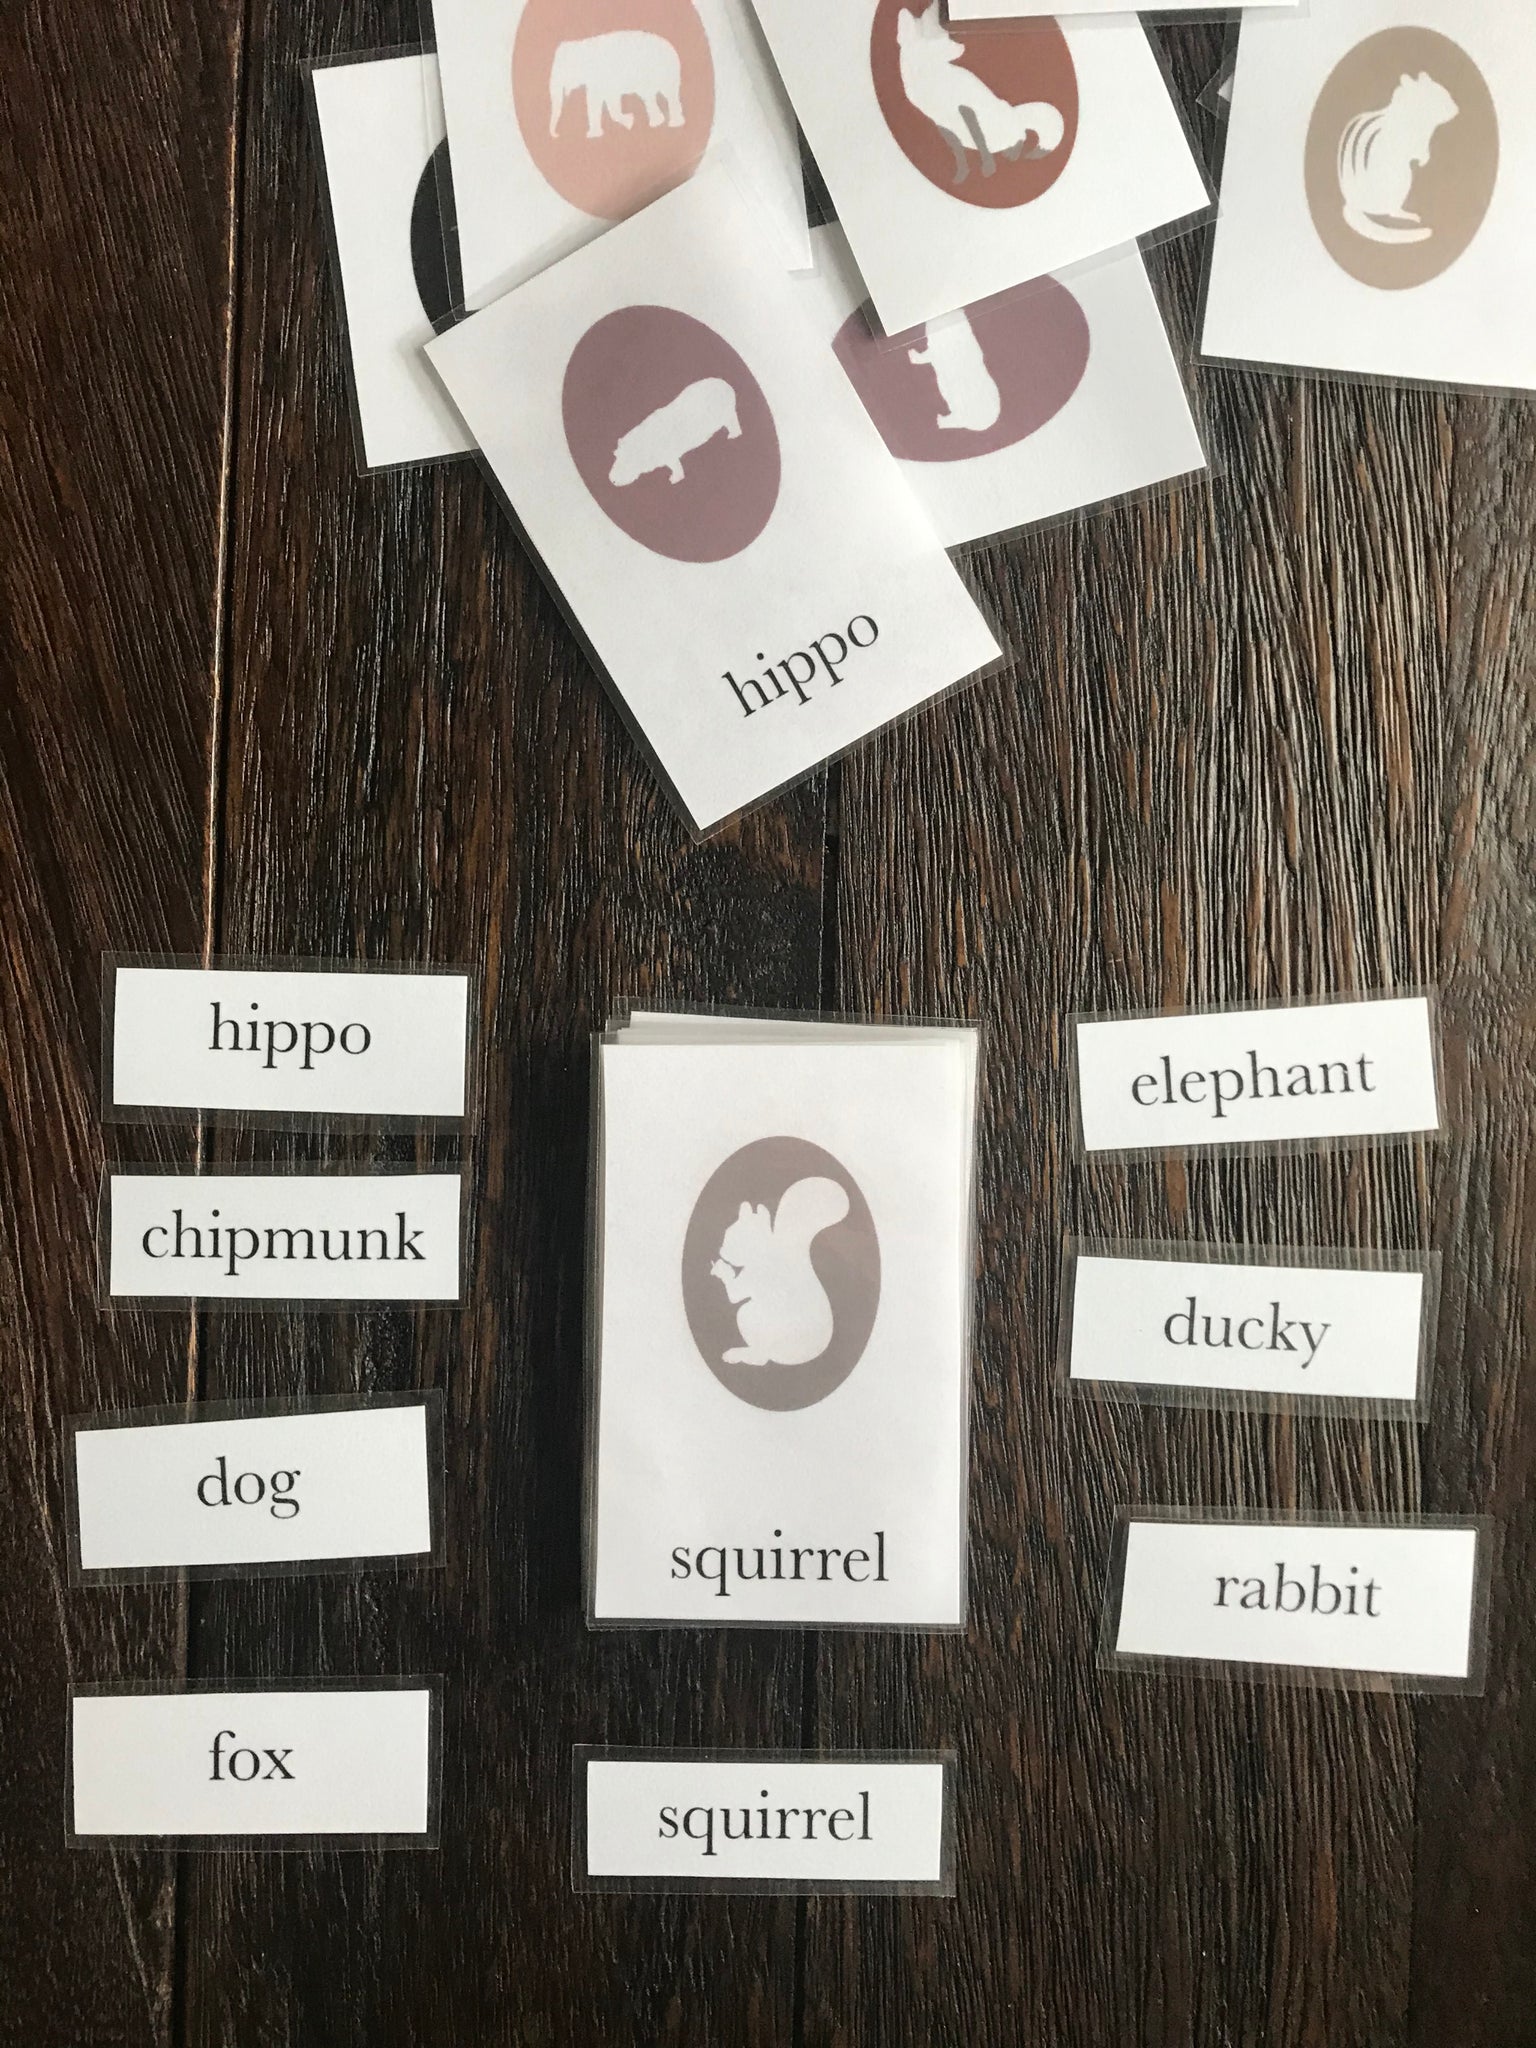 squirrel flashcard word matching game